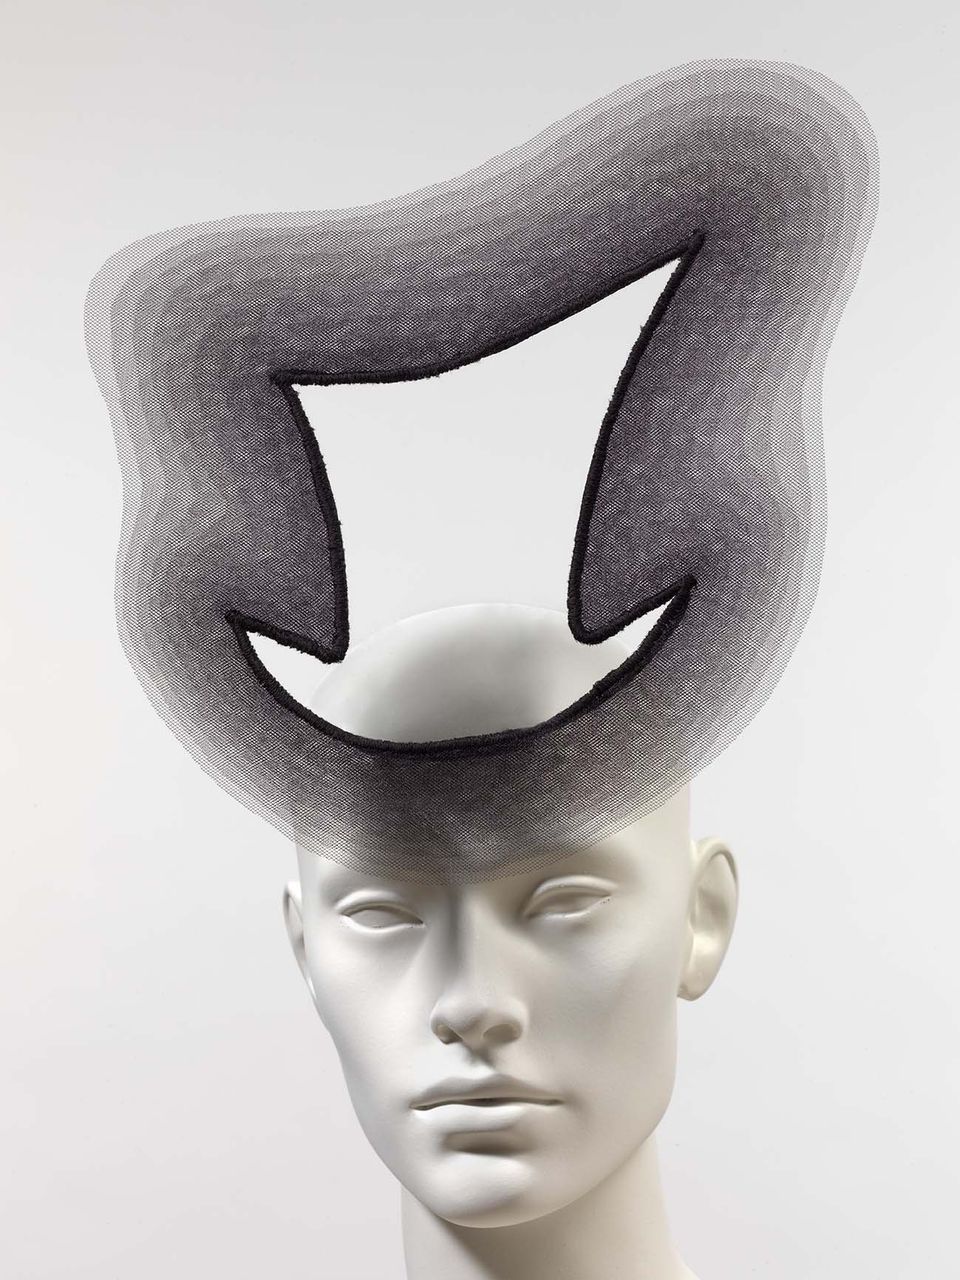 hoed 'AWOL' (2001-2002), Stephen Jones. Collectie MoMu Modemuseum Antwerpen, foto Hugo Maertens